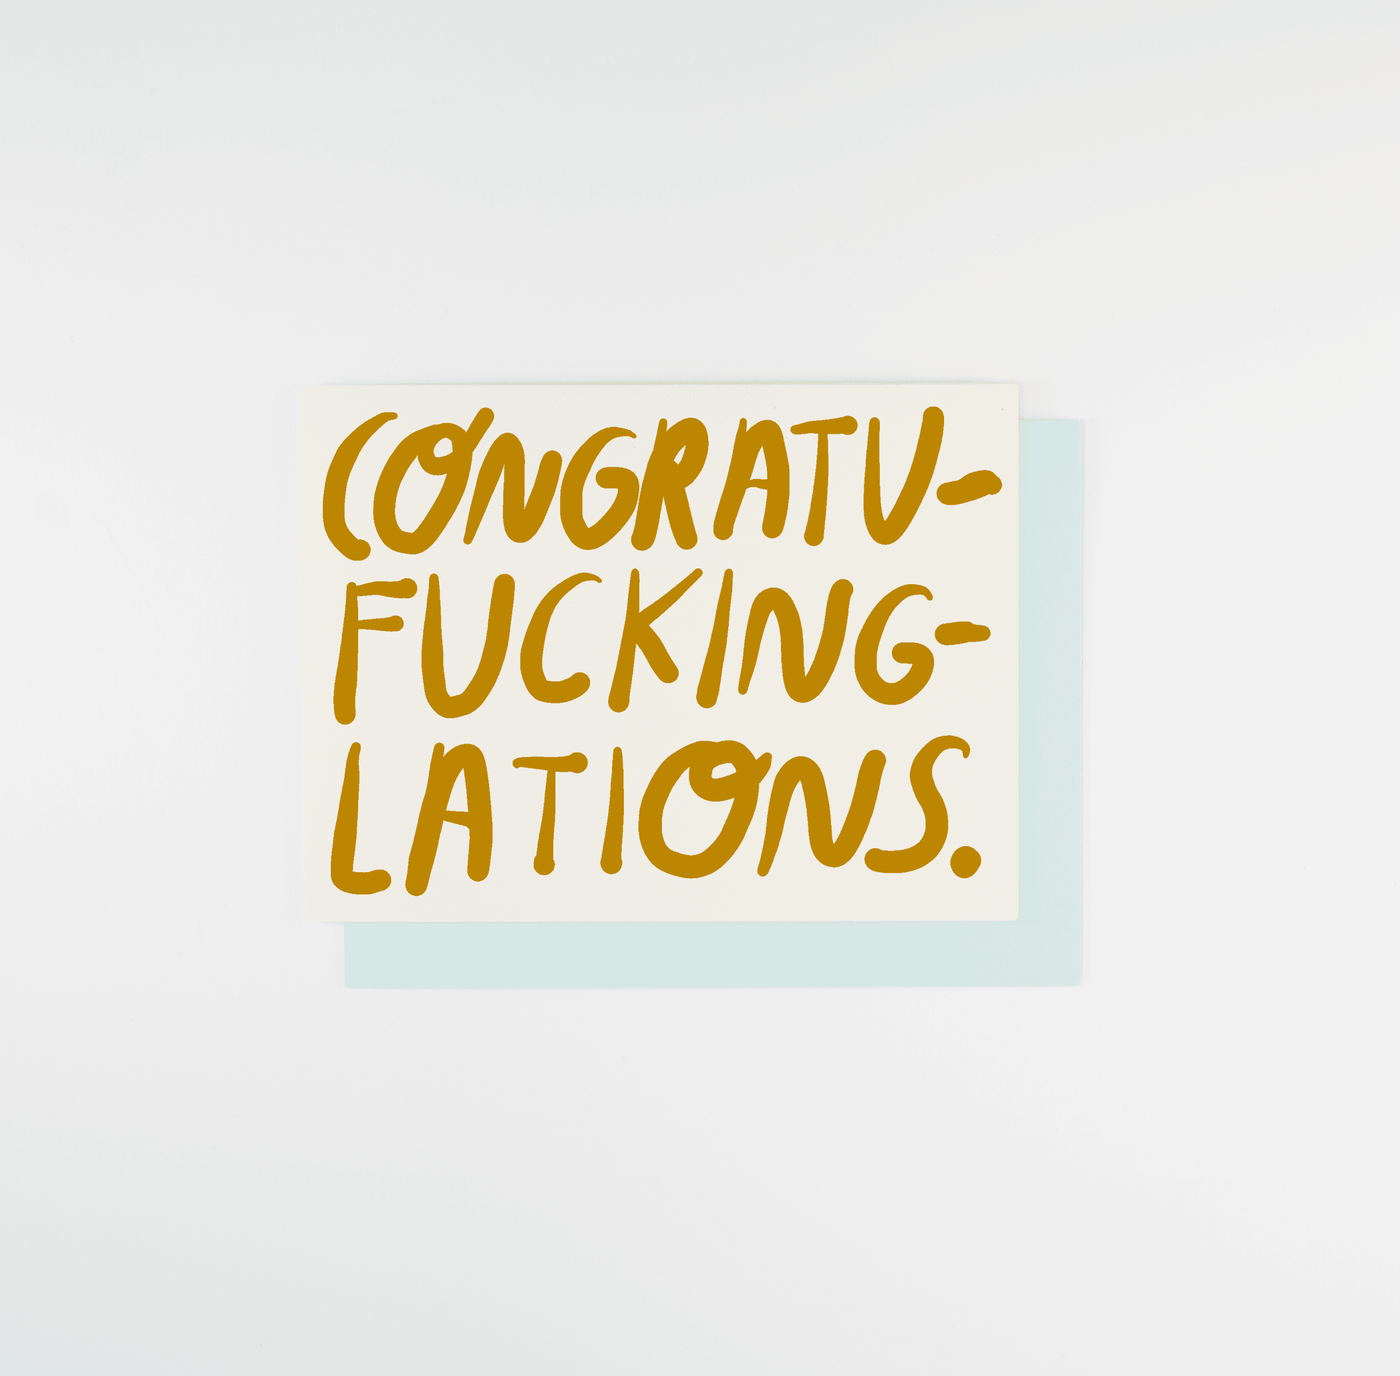 People I've Loved - Congratu-fucking-lations